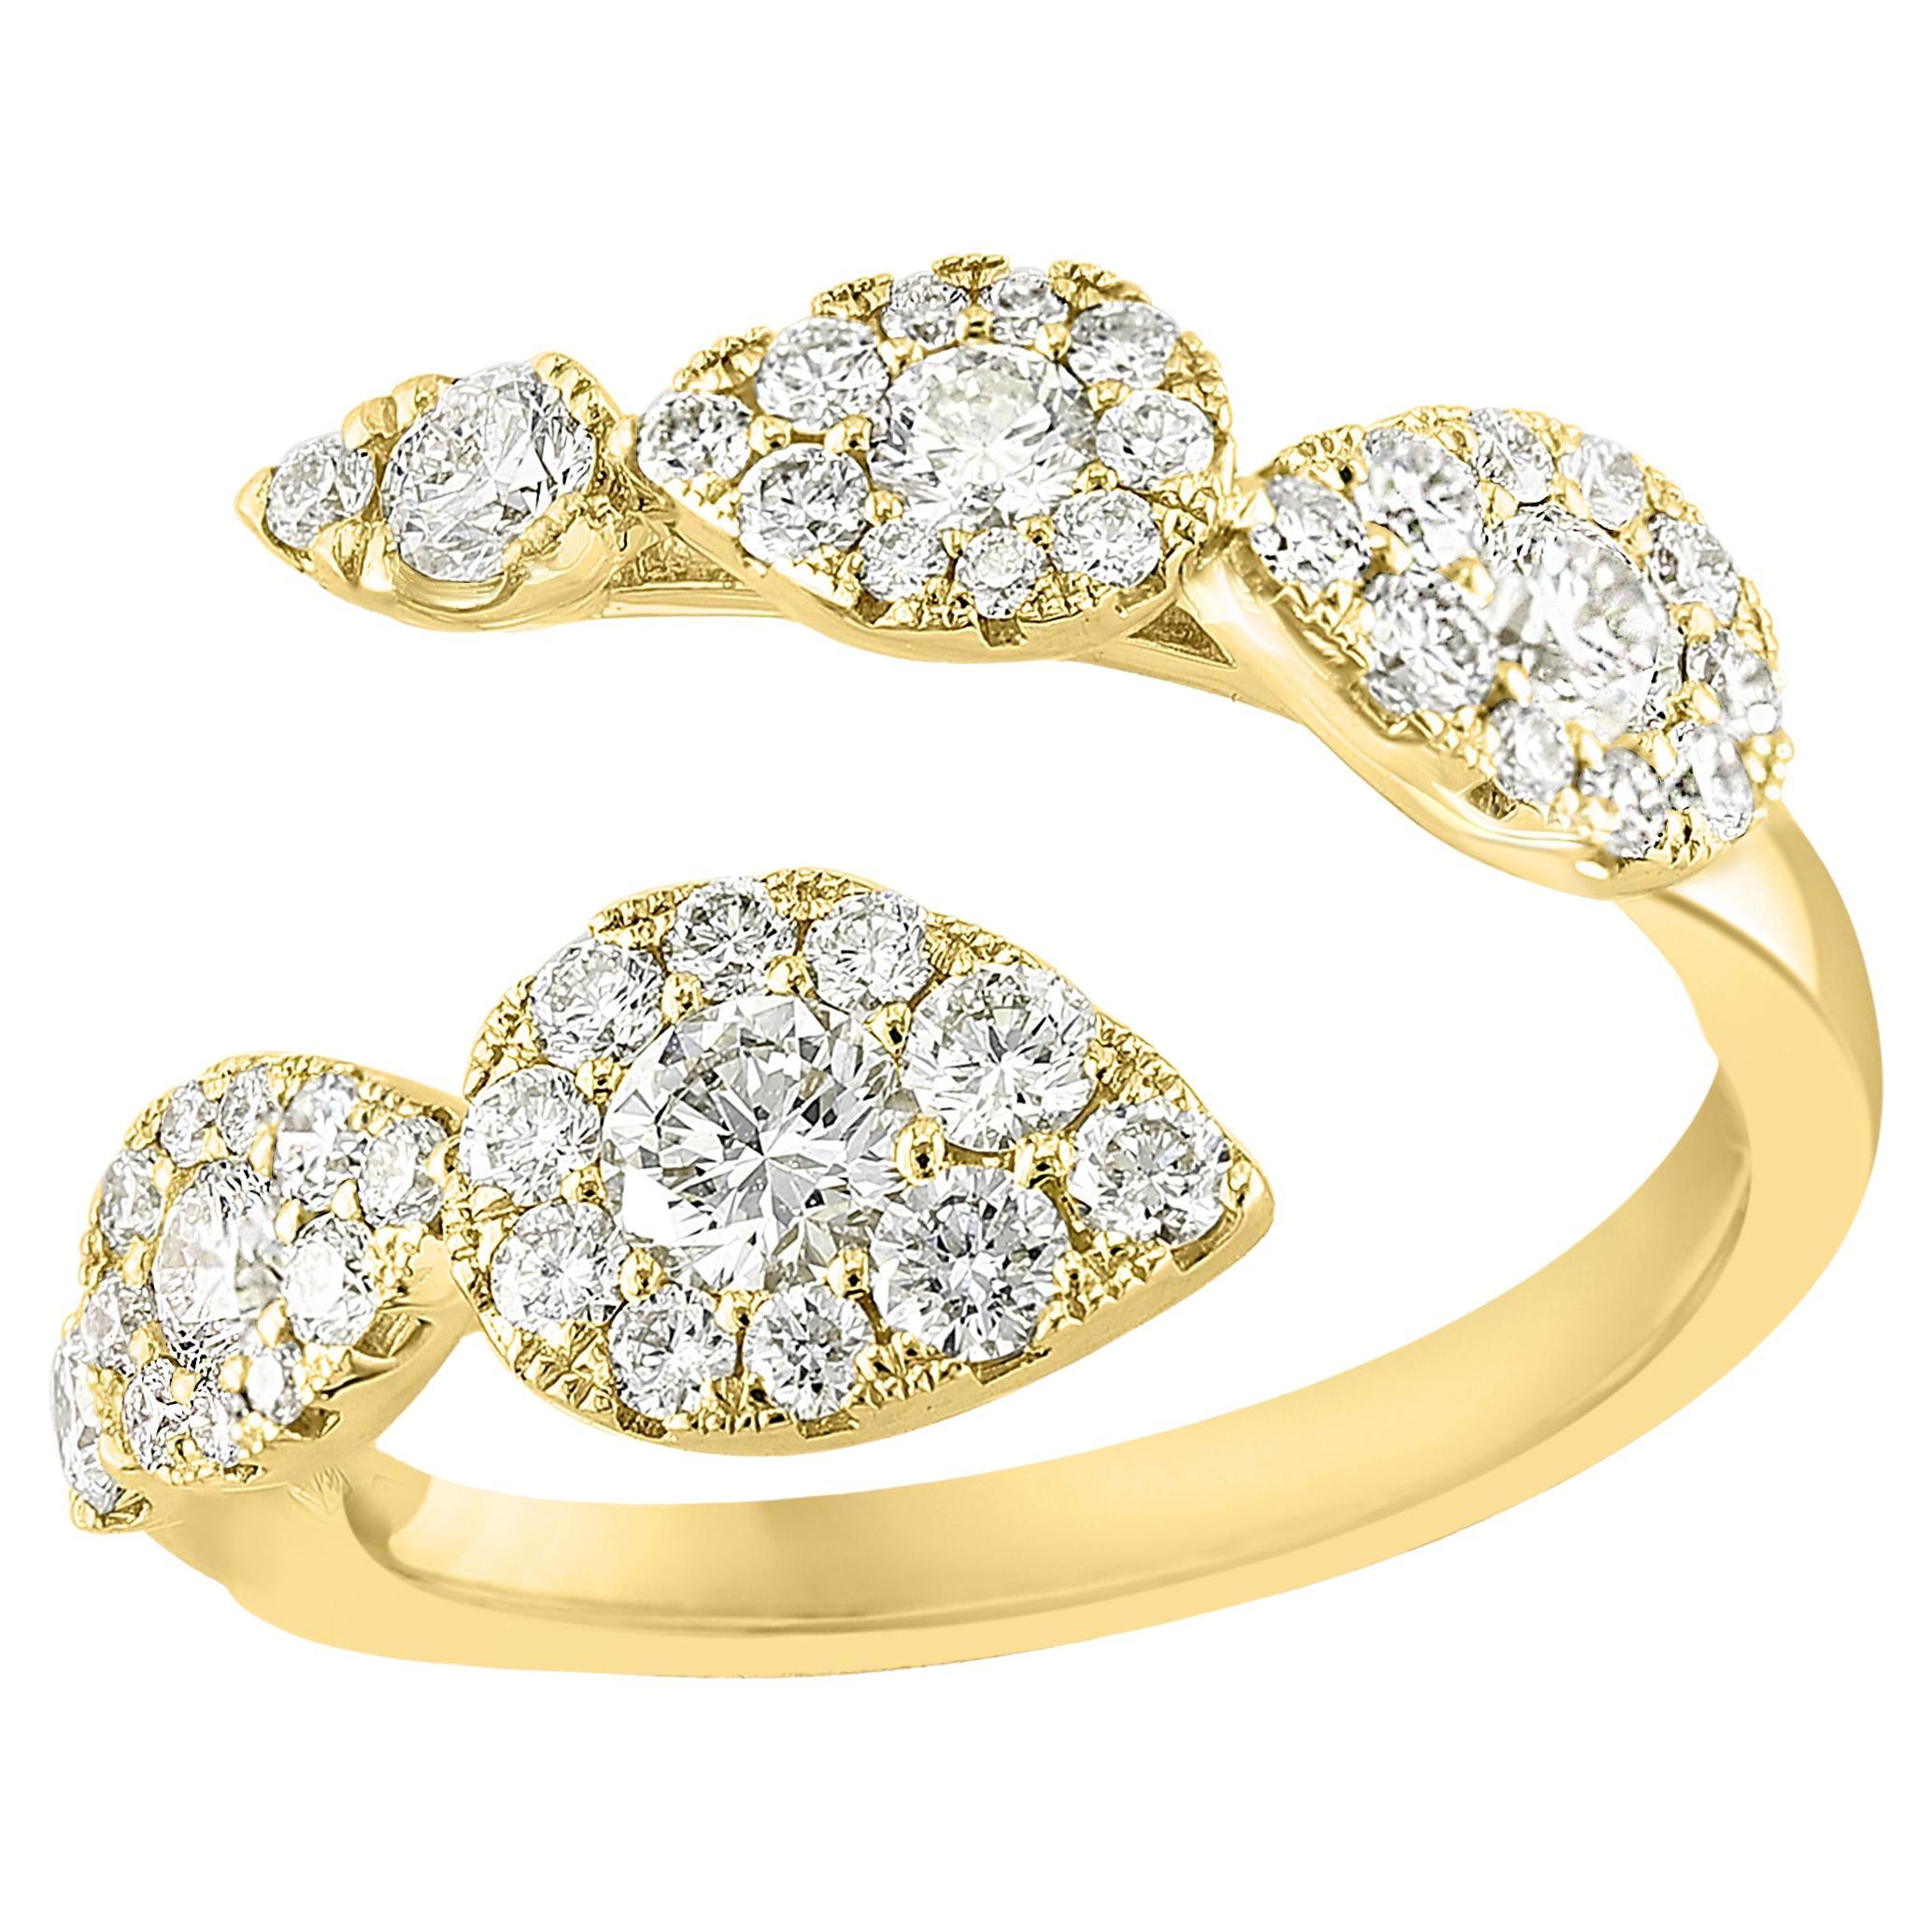 1.15 Carat Brilliant Cut Diamond Toi et Moi Ring 18K Yellow Gold For Sale